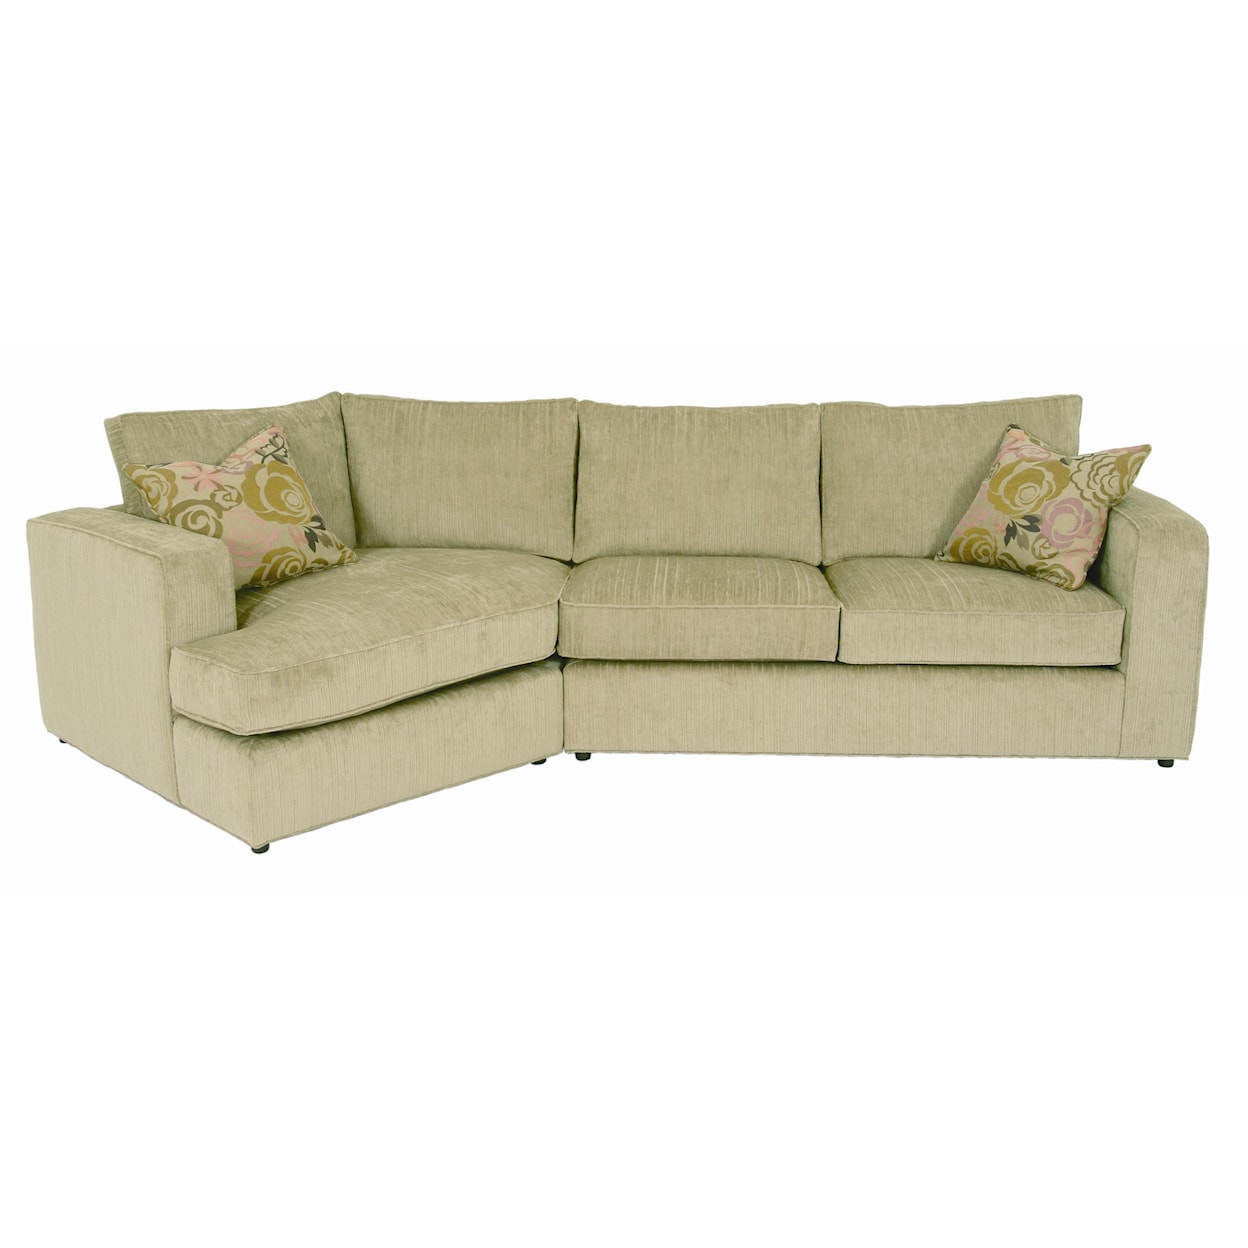 Norwalk Milford Angled Sectional Sofa